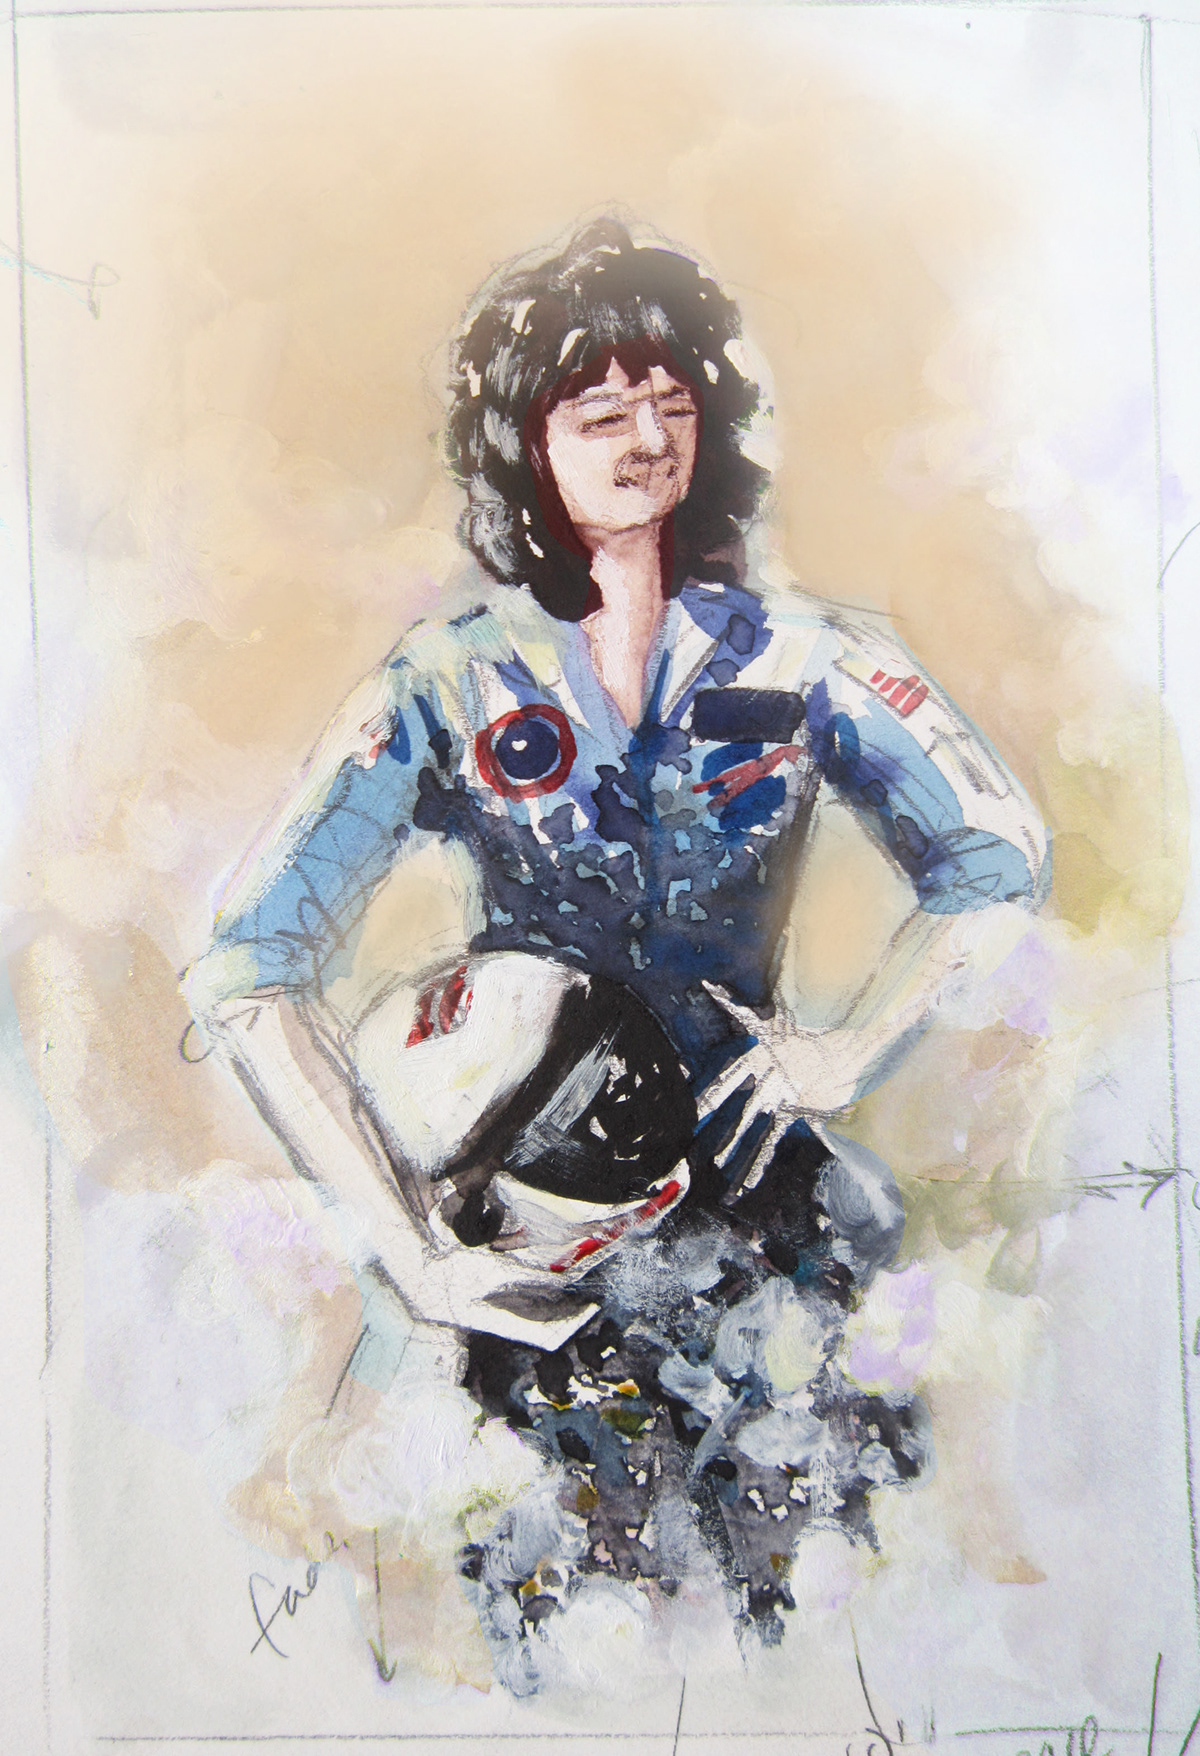 Sally Ride astronaut Helmet Sally ride stars Space  portrait